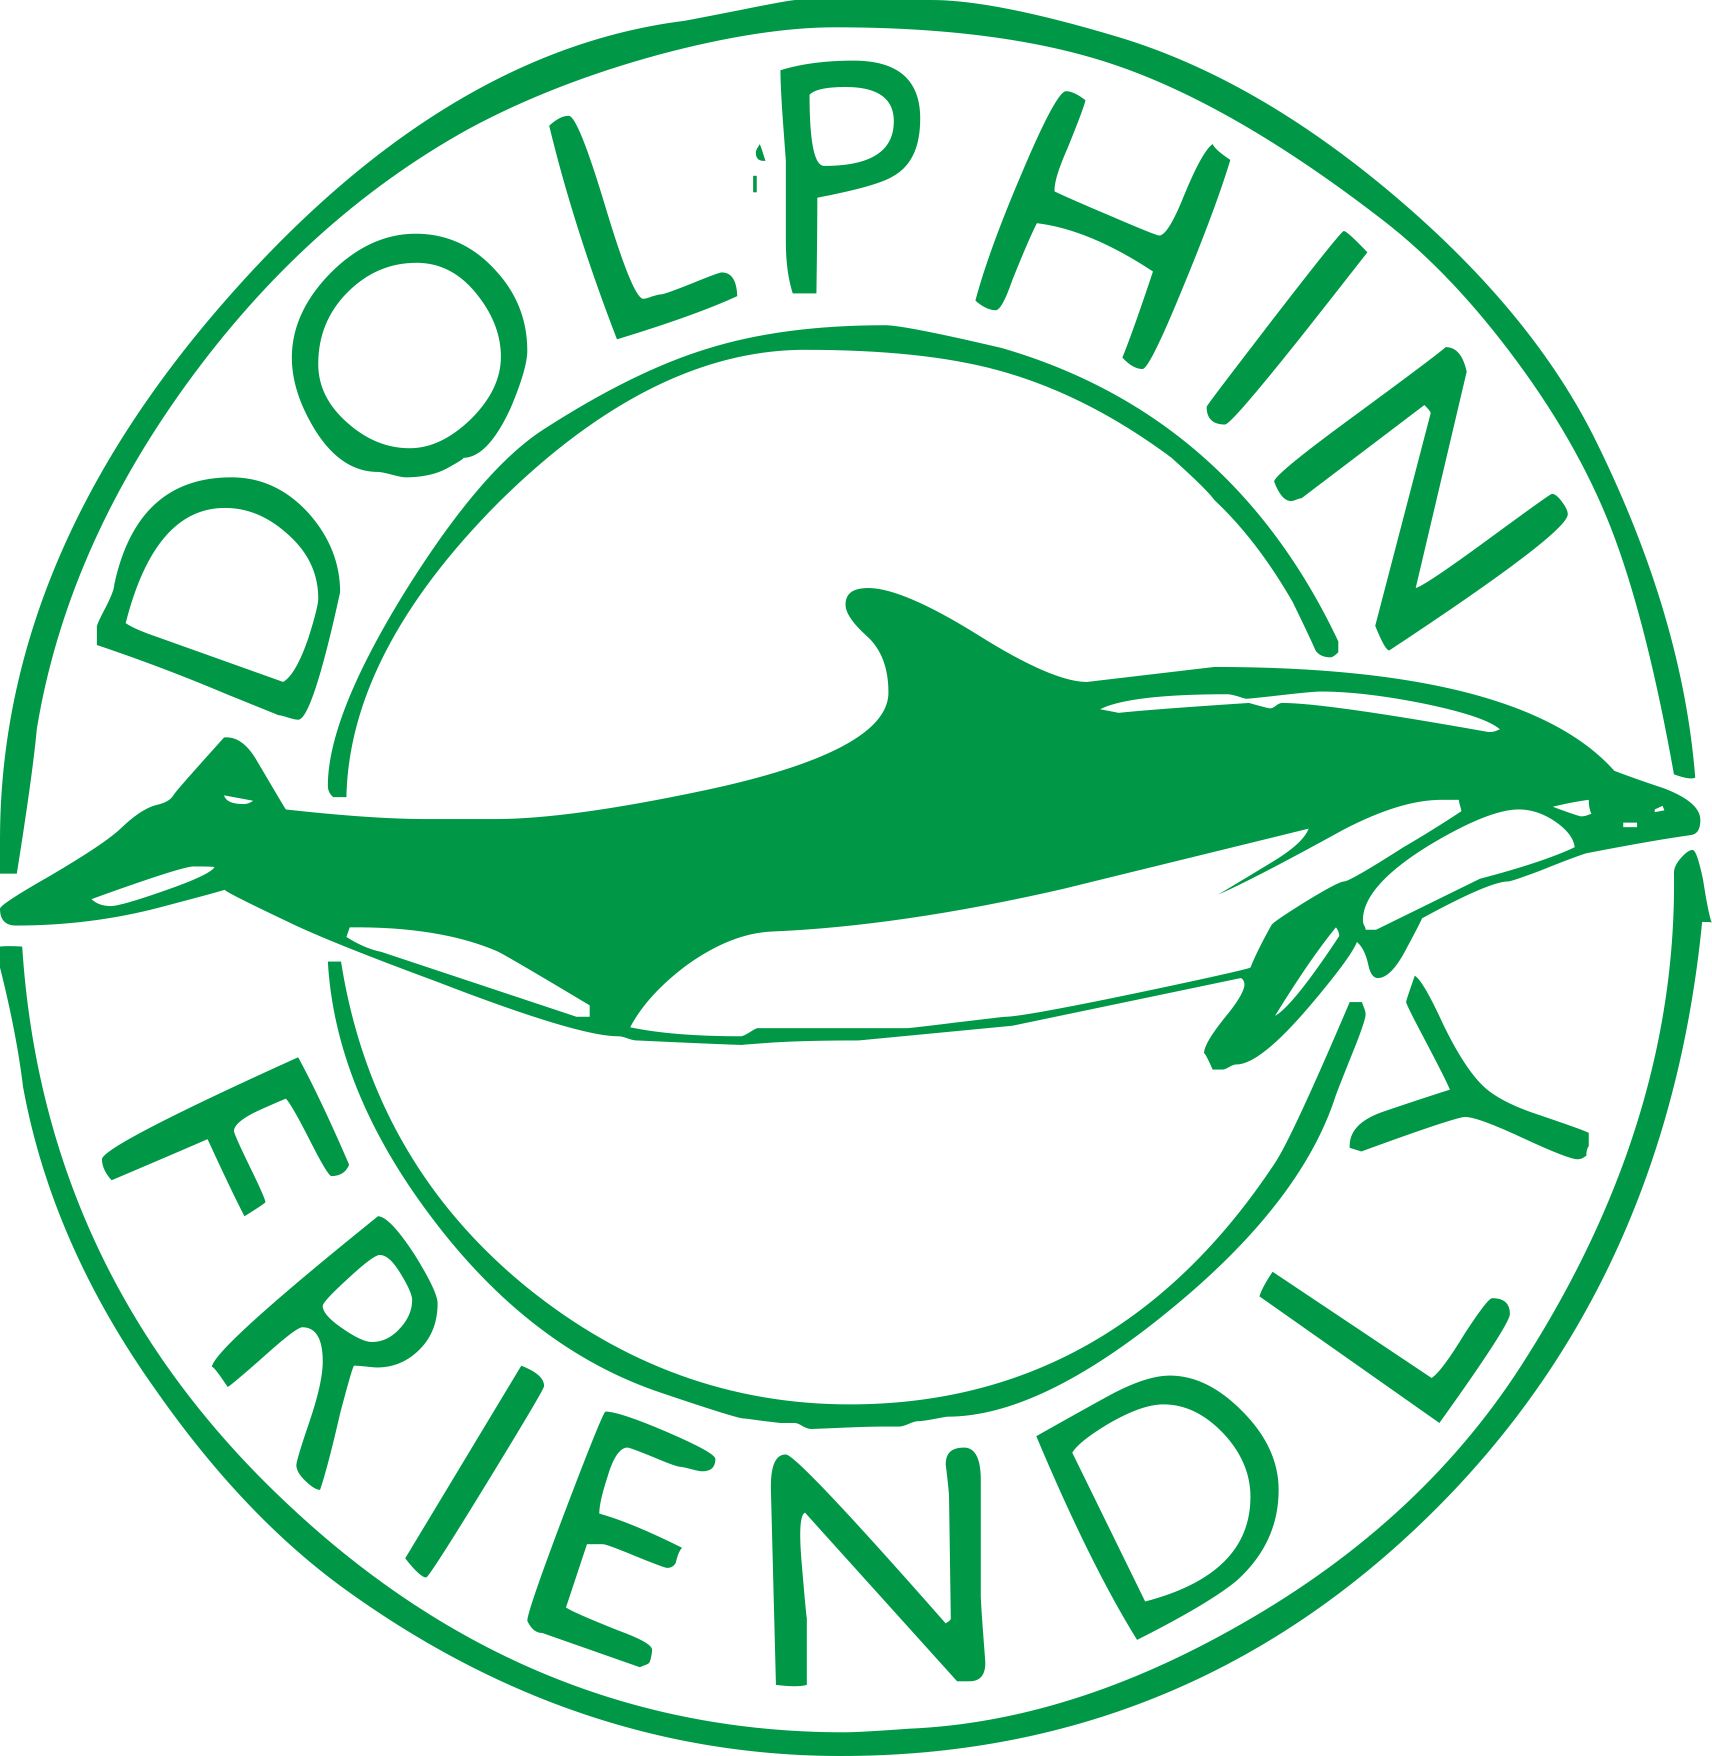 Dolphin api. Dolphin friendly Экознак. Экомаркировка Dolphin friendly. Символ экологии. Дельфин лого.